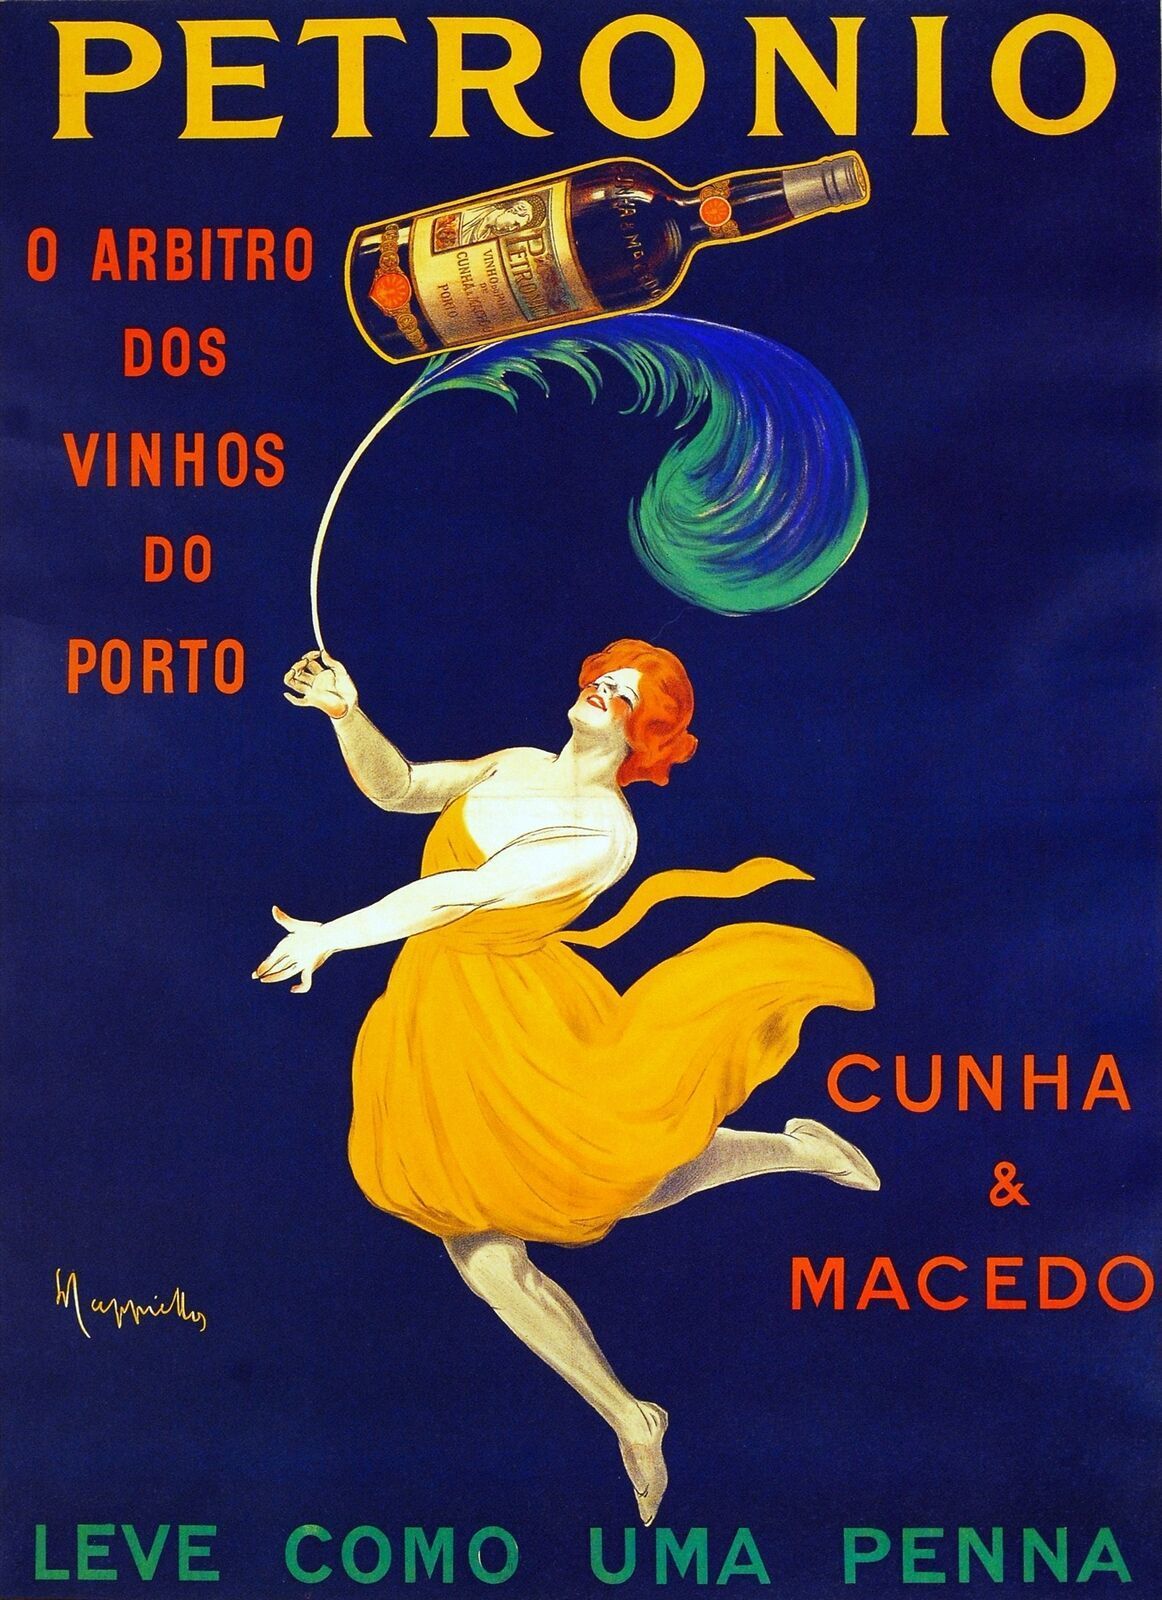 6477.Petronio Leve como uma penna Advertisement 18x24 Poster.Wall Art Decorative - $28.00